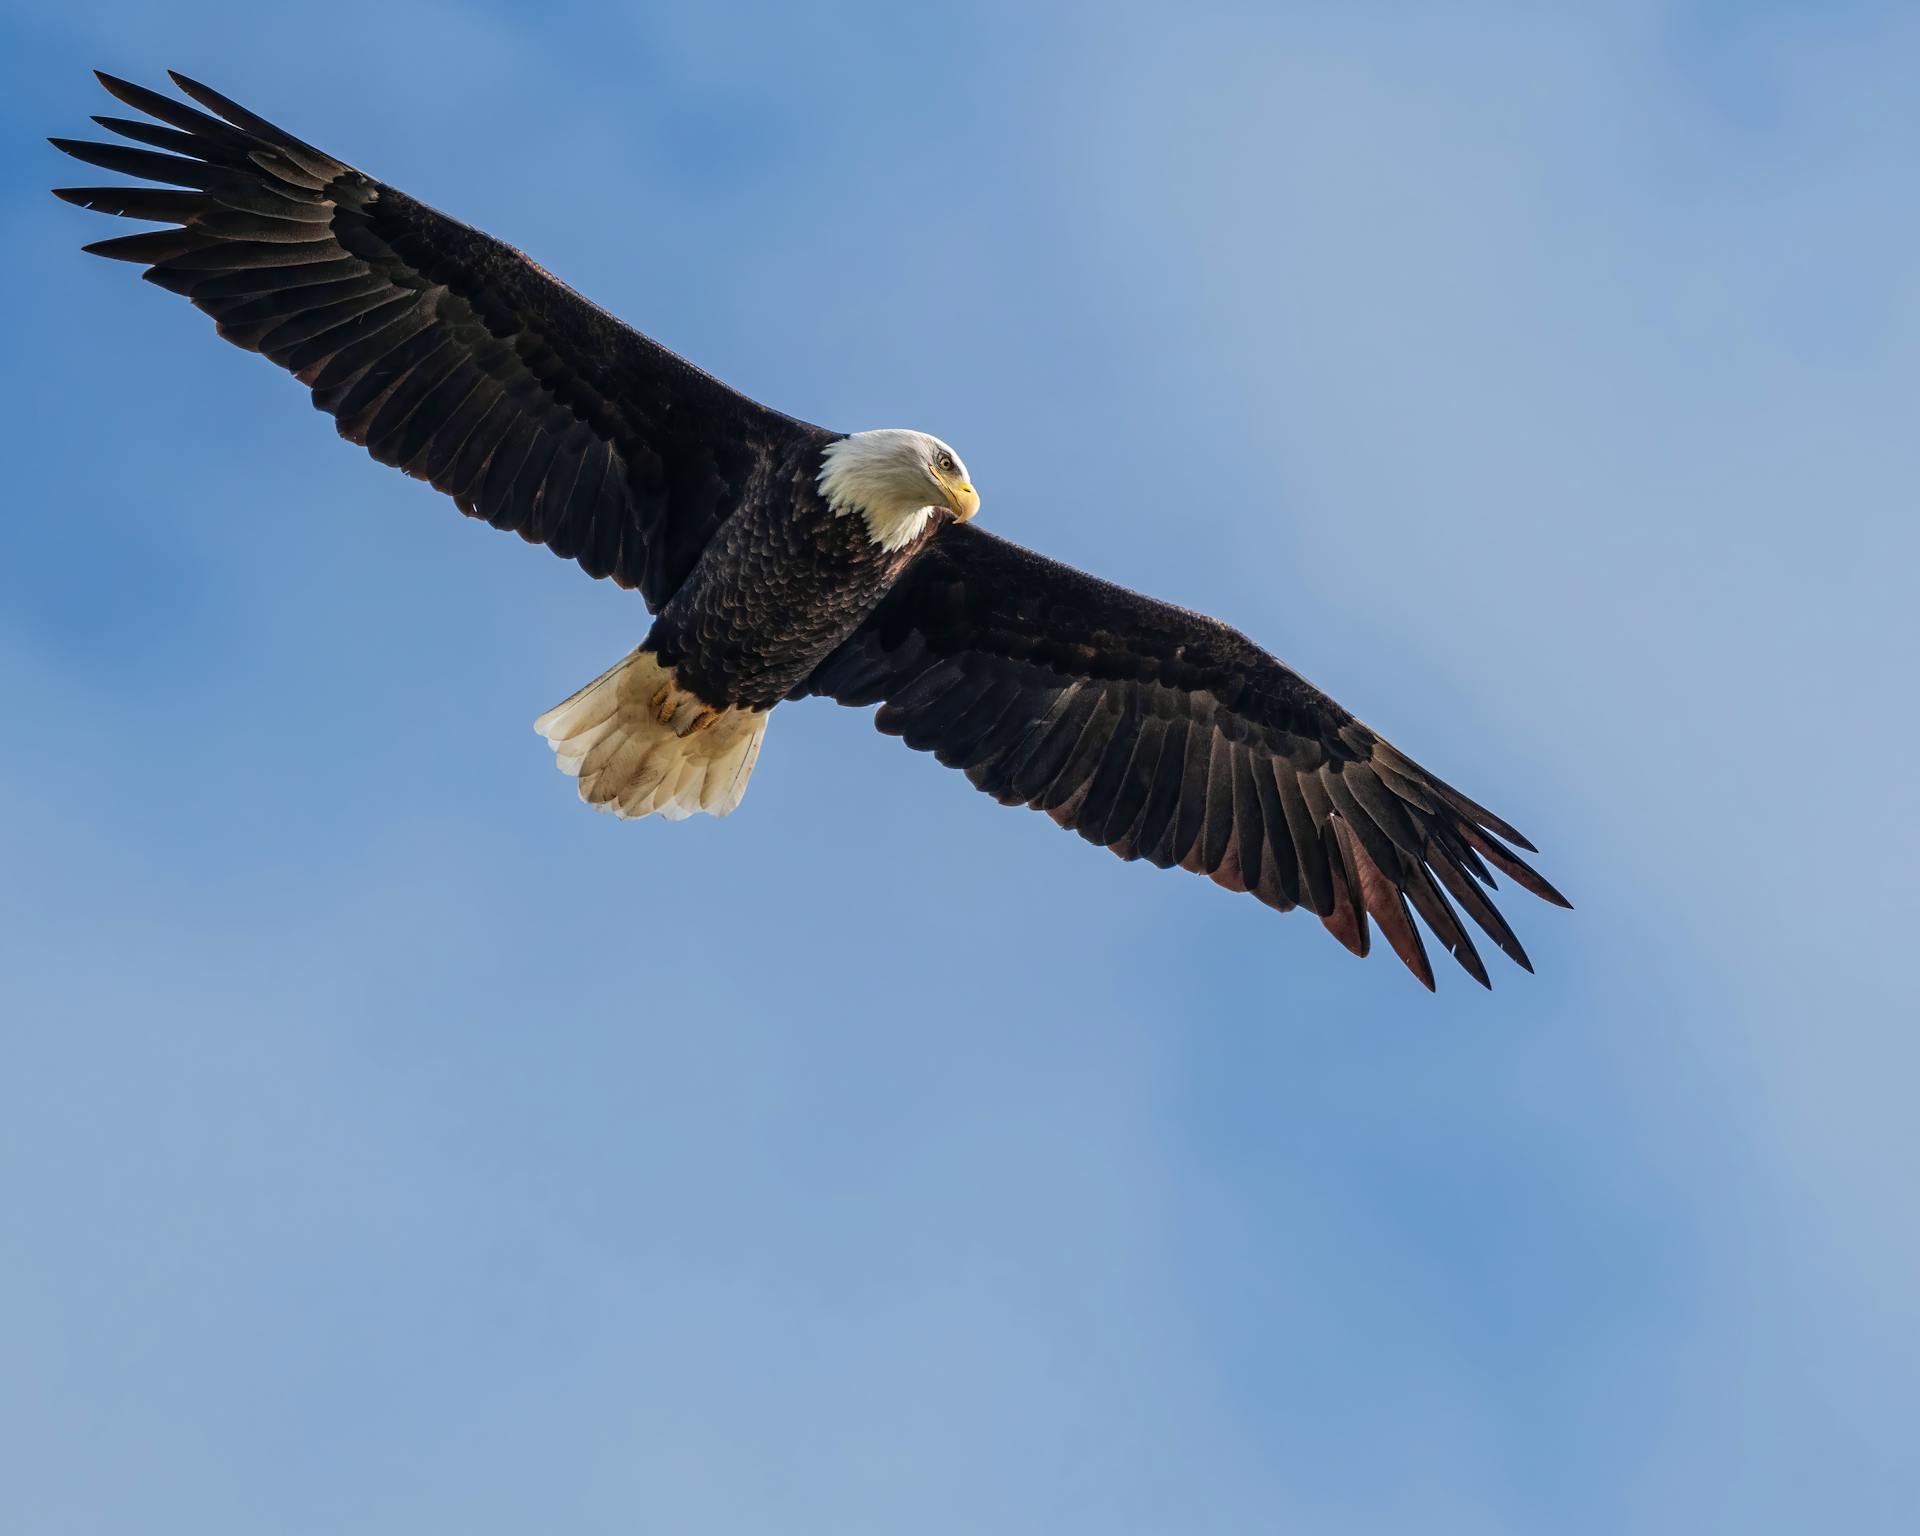 Wild eagle soaring in blue skies